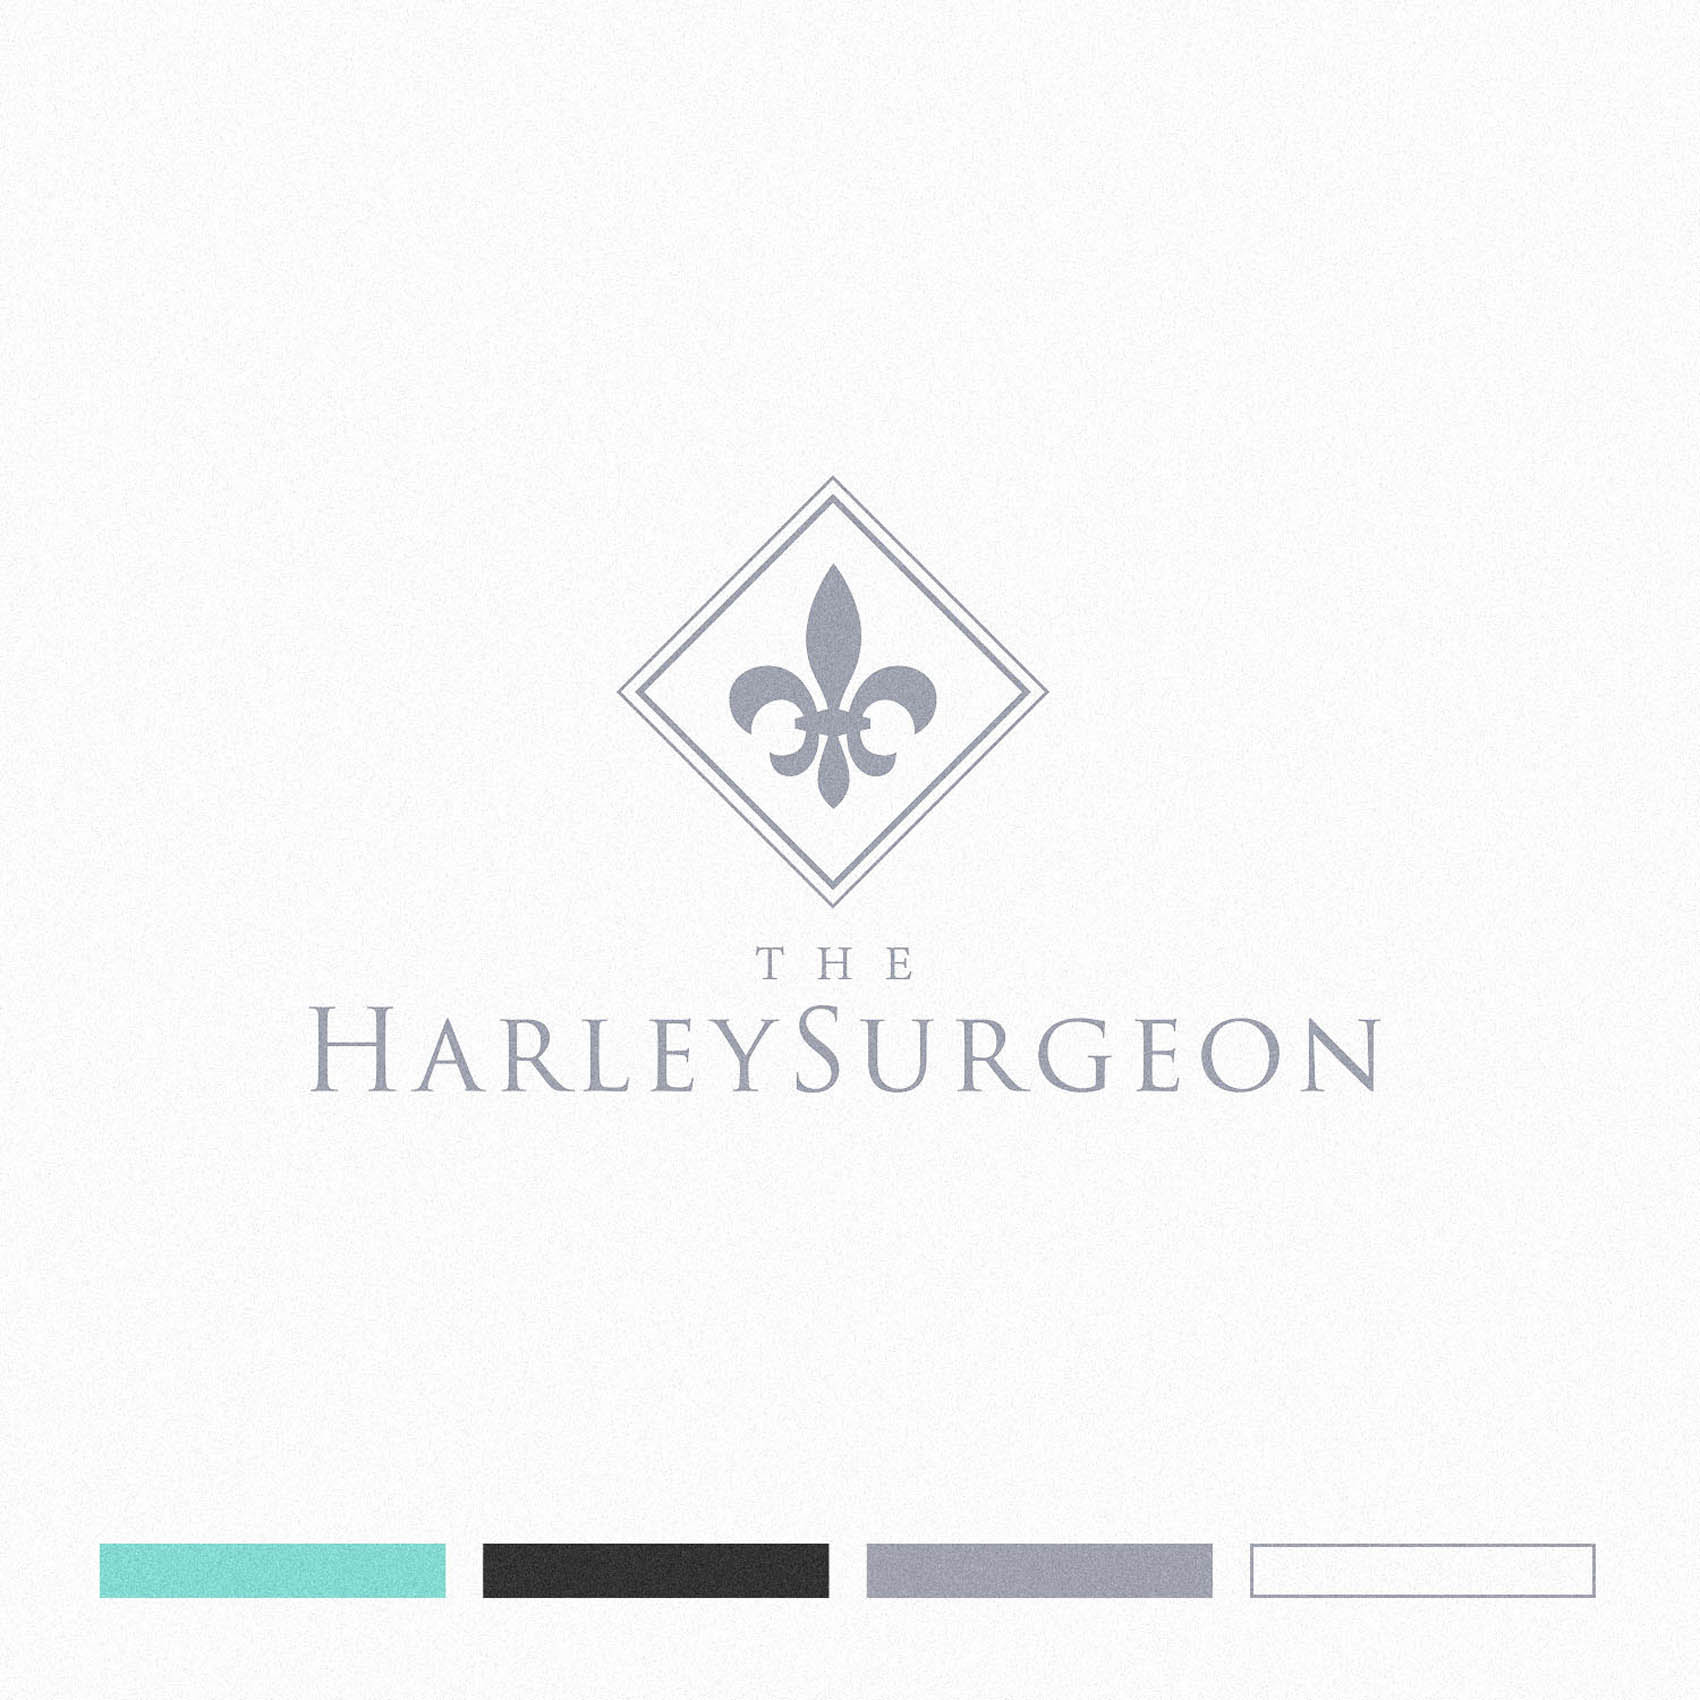 The Harley Surgeon - Logo Design